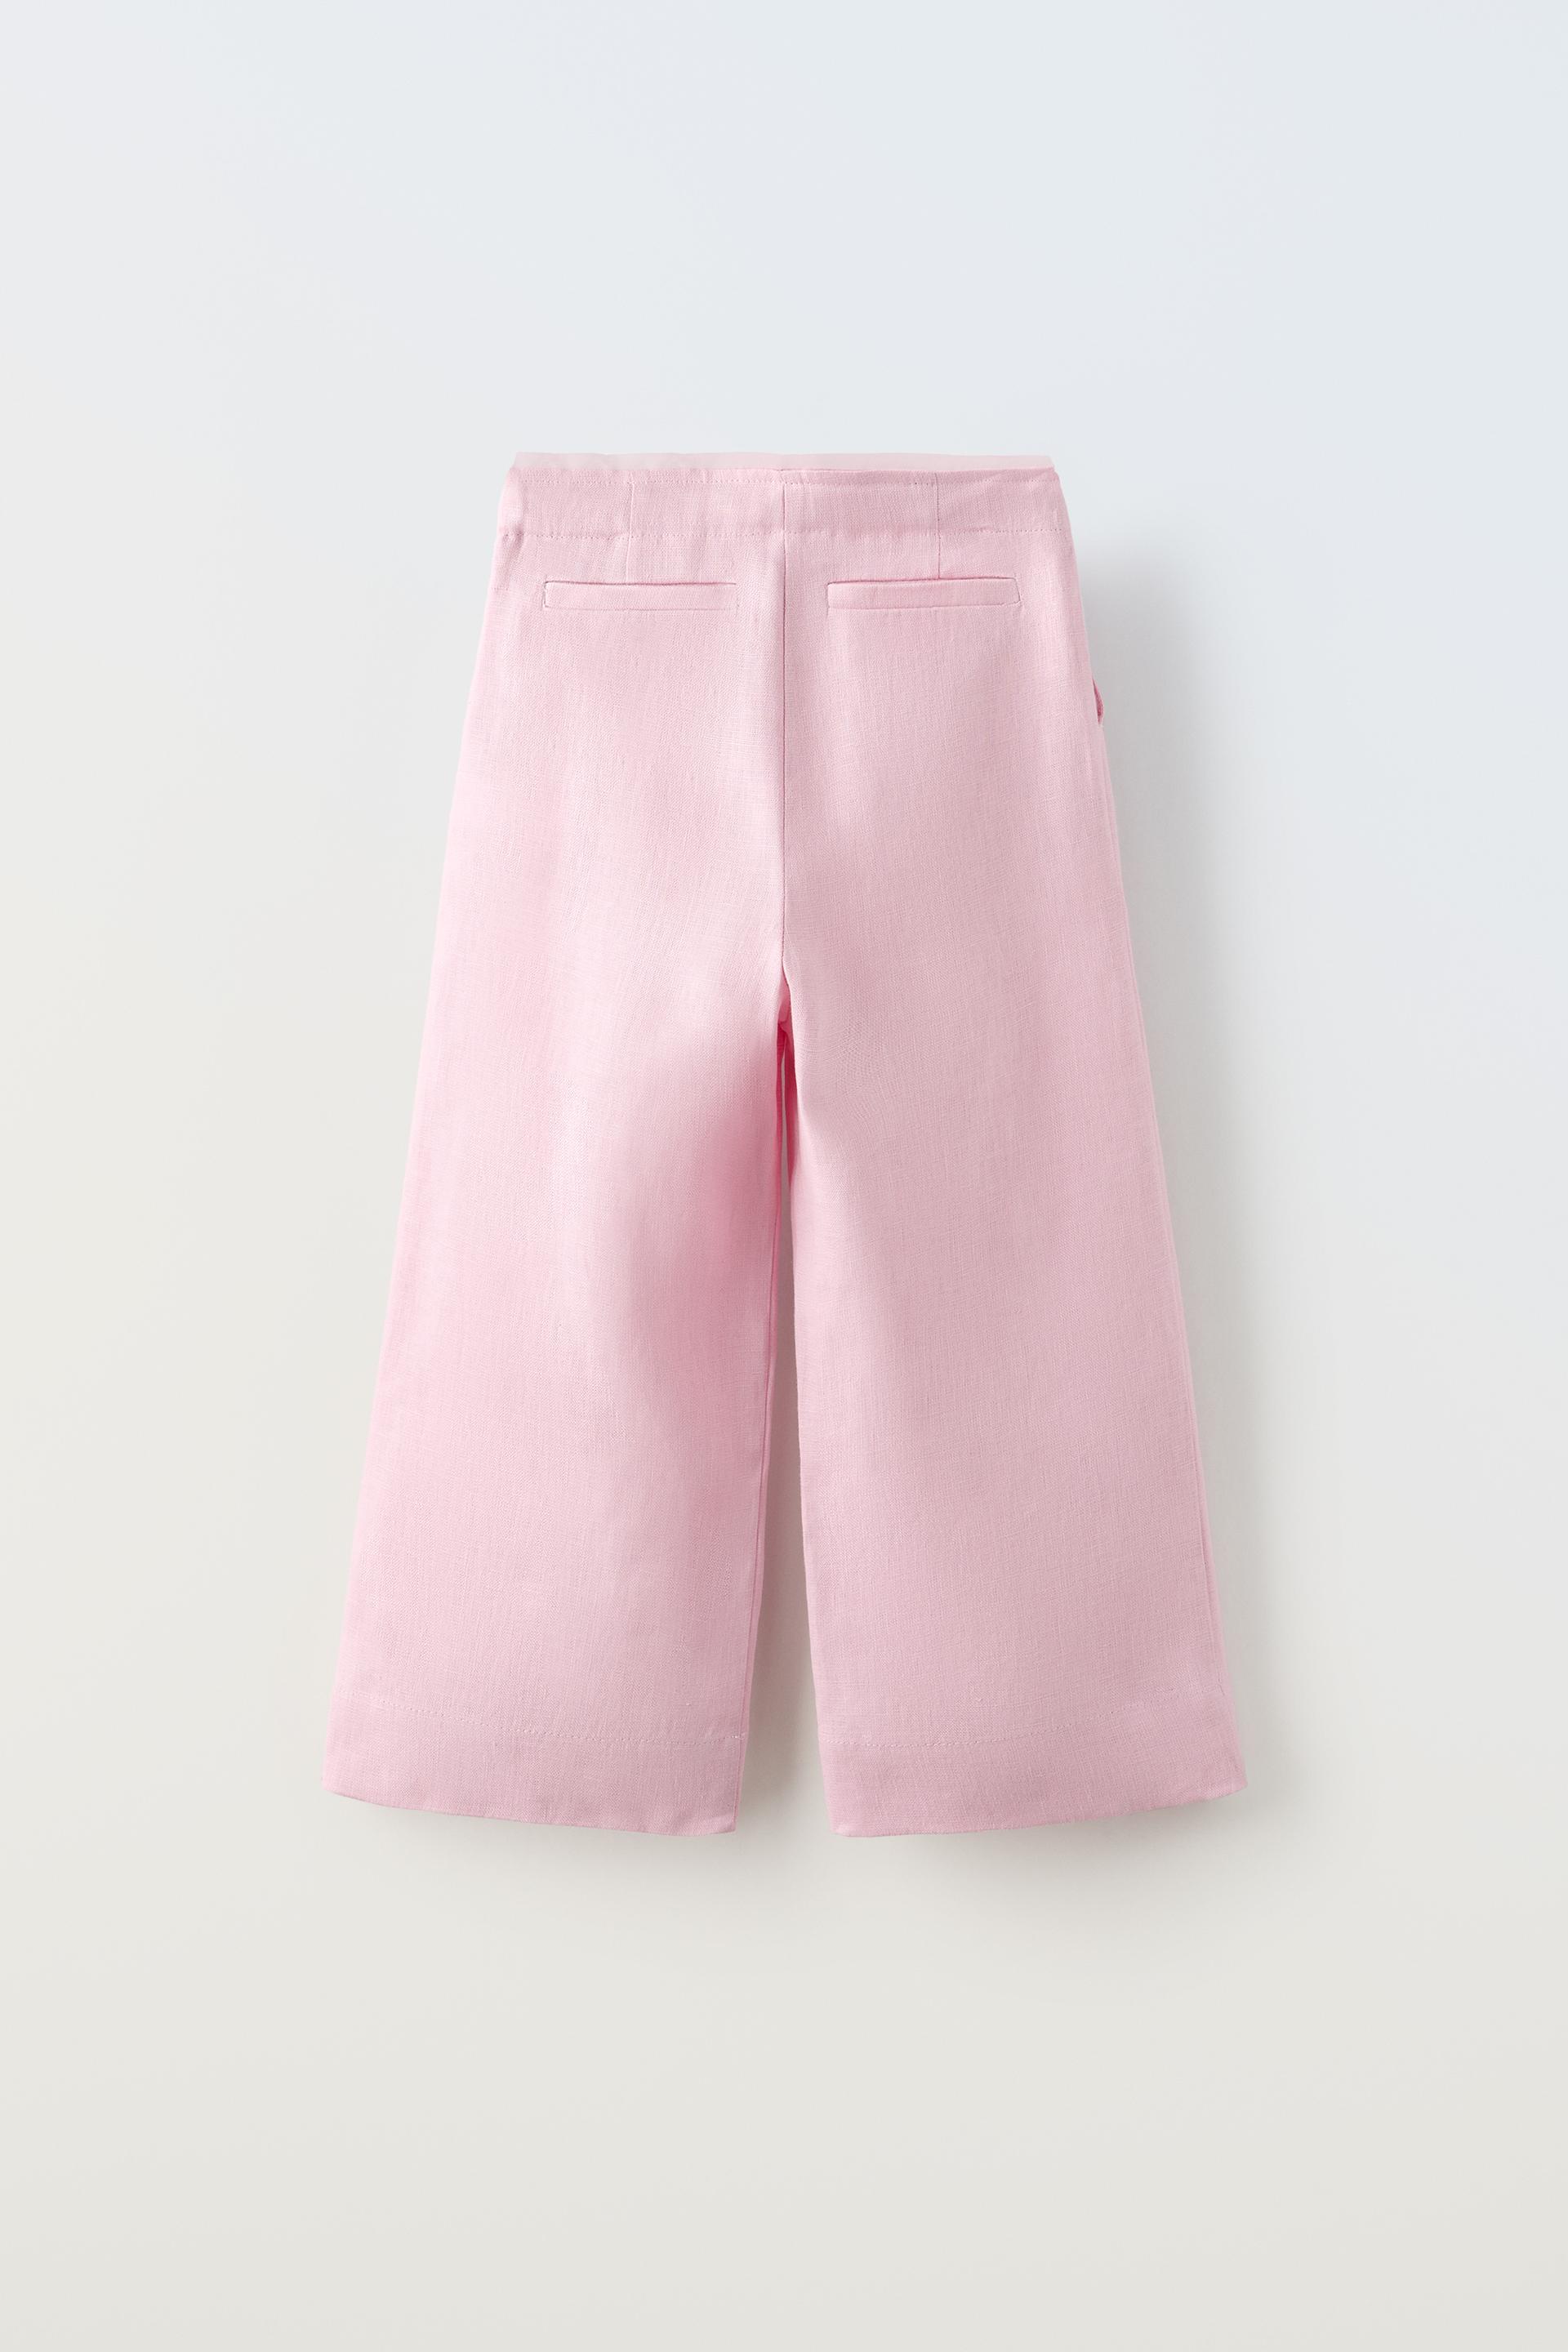 ZARA BNWT Pink Linen Blend Straight Trousers Pants 2754/378 Size